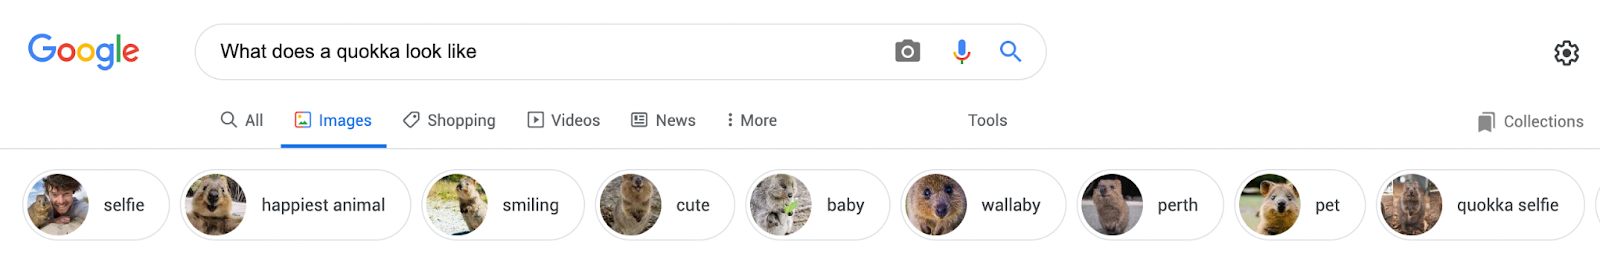 Google Images sort options